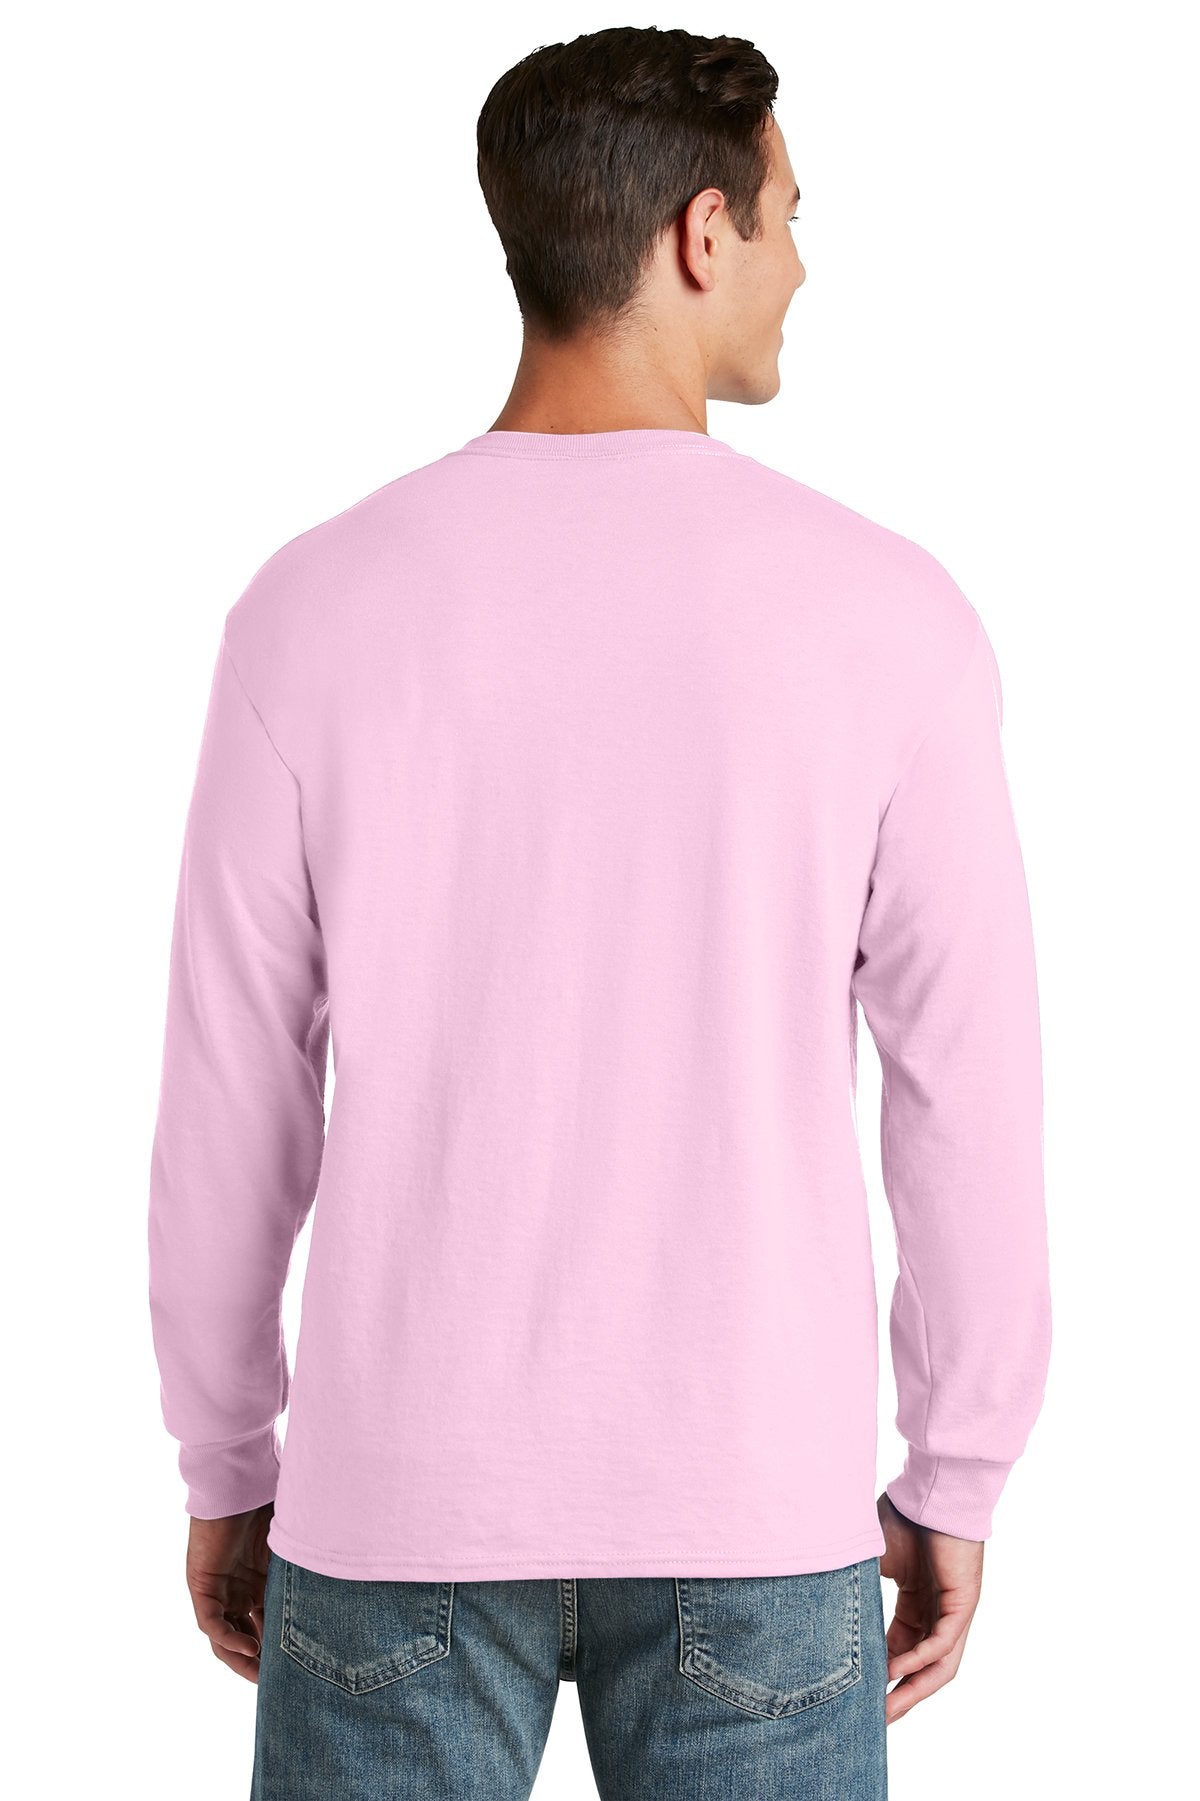 Jerzees Dri-Power 50/50 Cotton/Poly Long Sleeve T-Shirt 29LS Classic Pink